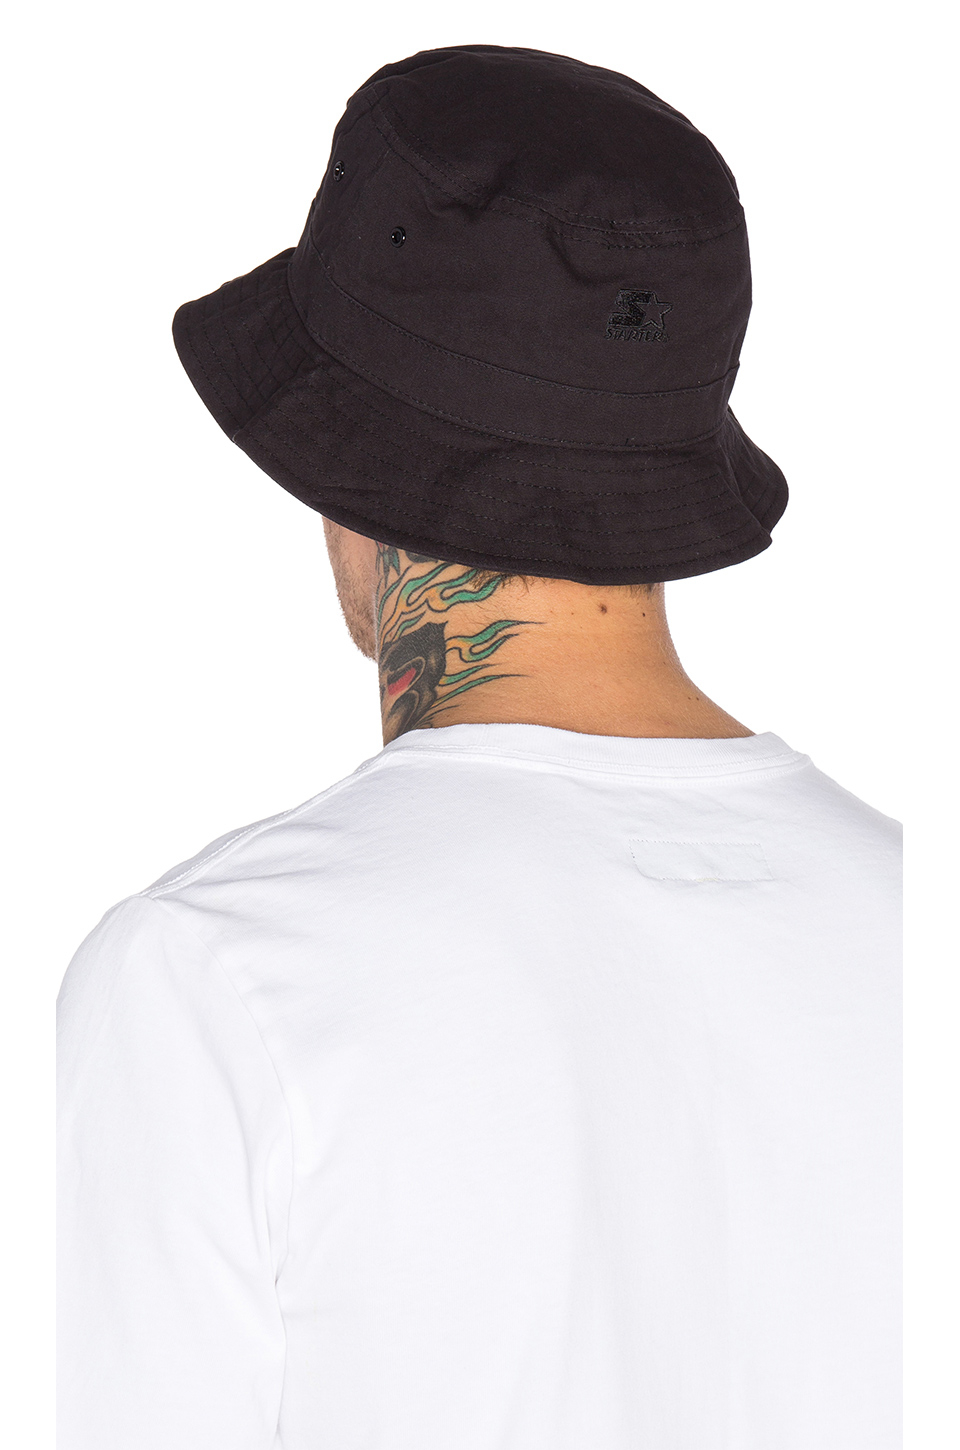 Carhartt WIP Cotton Watch Bucket Hat in Brown for Men - Lyst